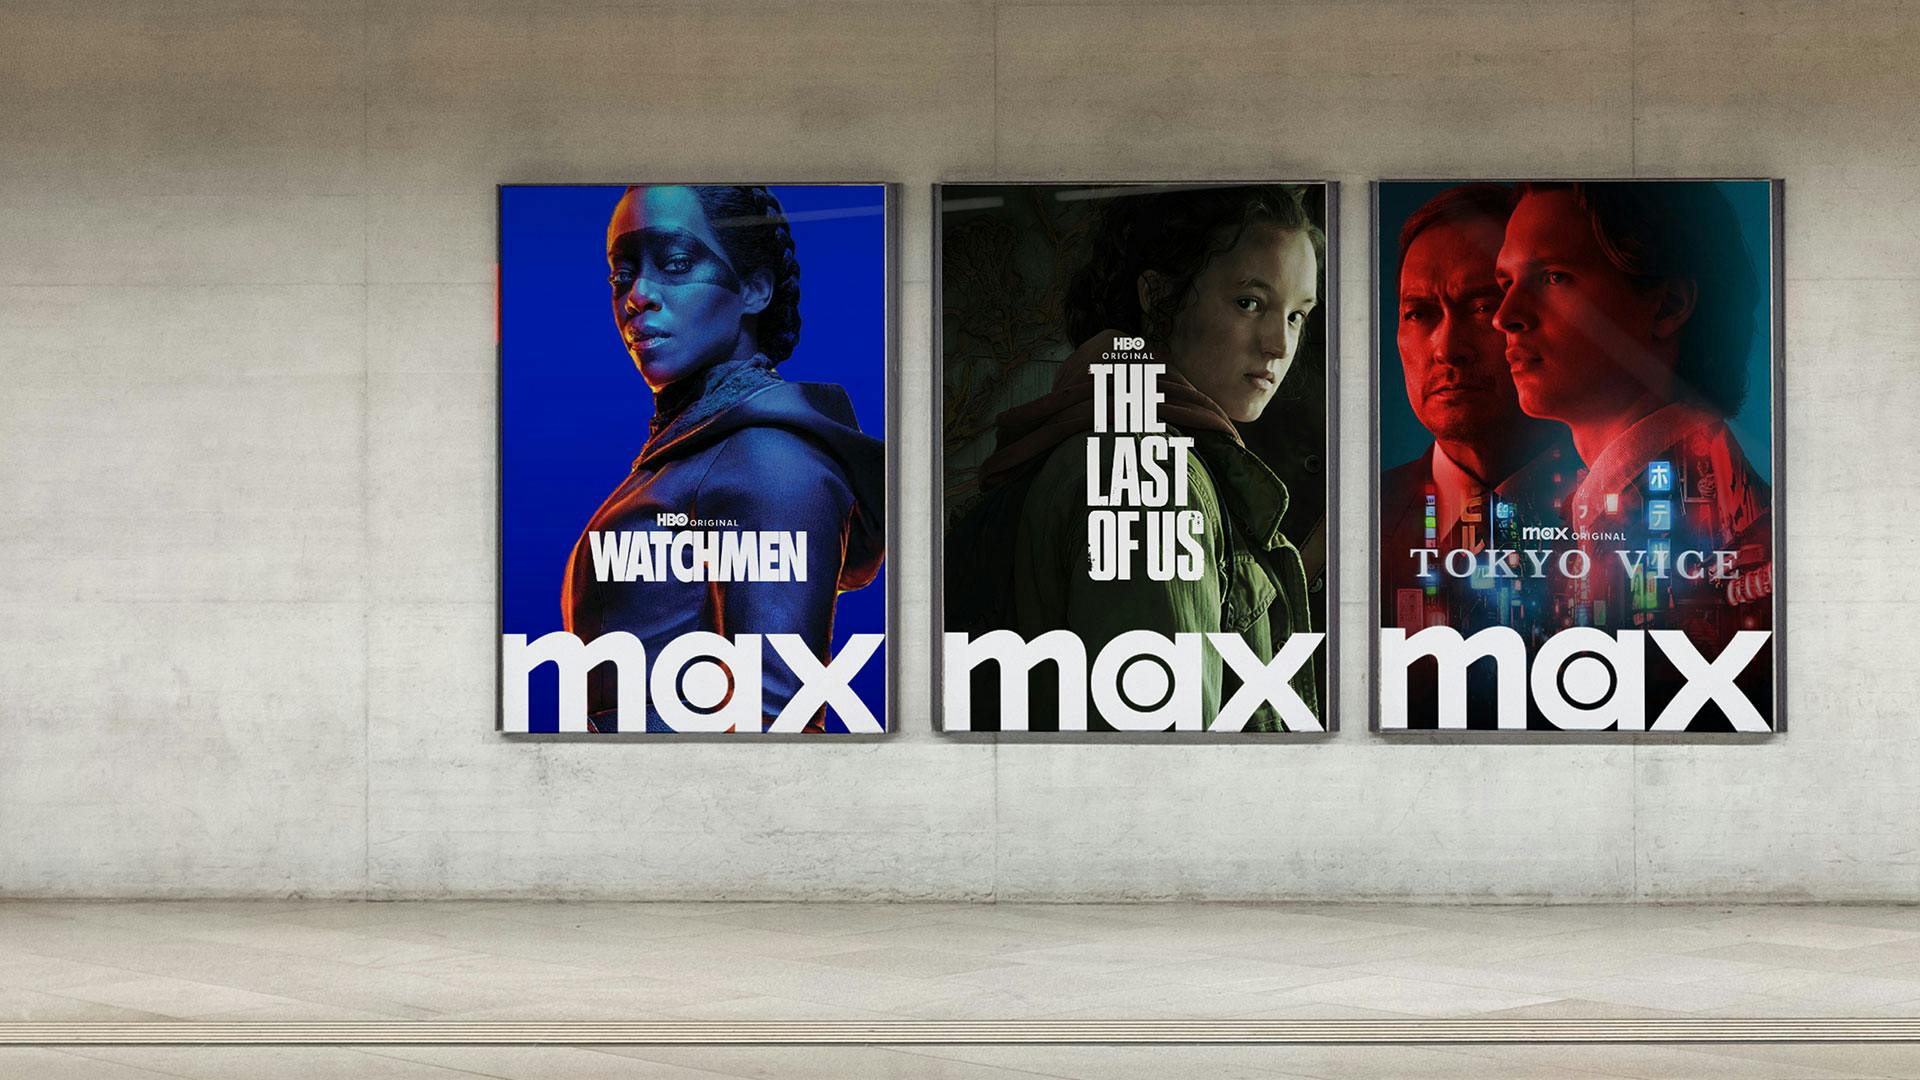 Dixonbaxi Creates New Identity For Streaming Platform Max